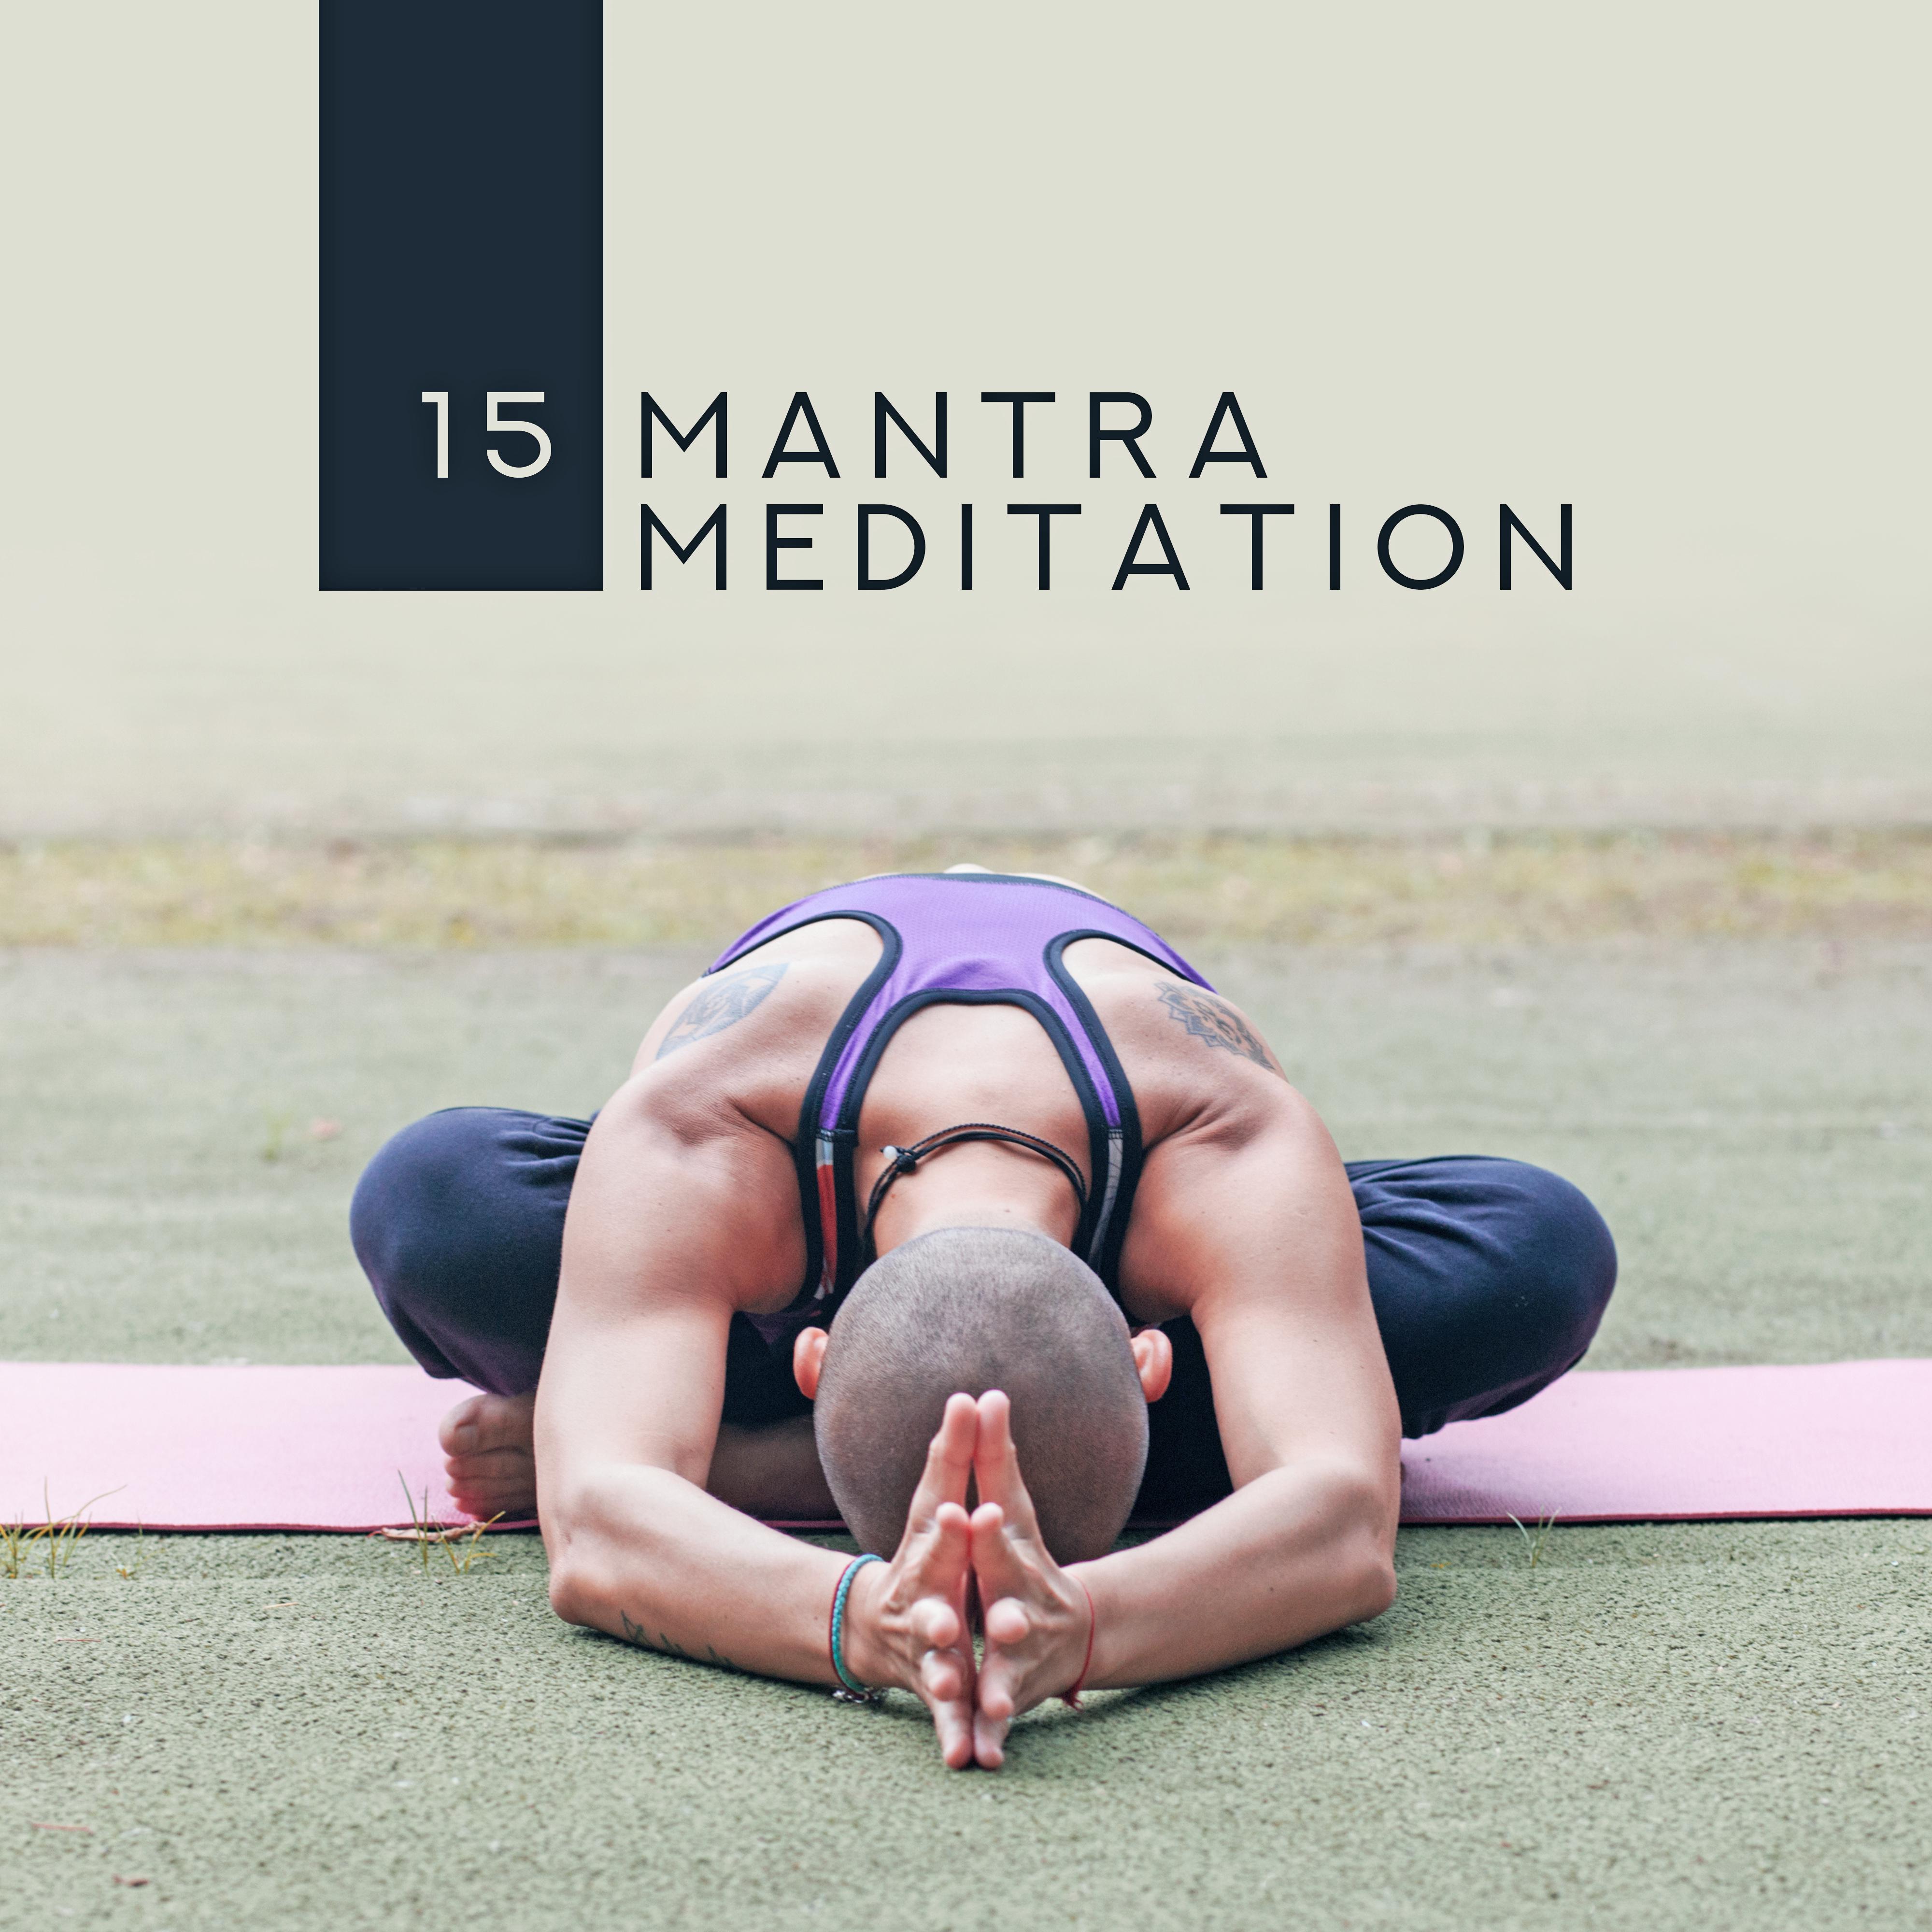 15 Mantra Meditation – Reiki, Zen, 15 Oriental Sounds for Yoga, Meditation, Spiritual Awakening, Inner Bliss, Chakra Zone, Yoga Practice